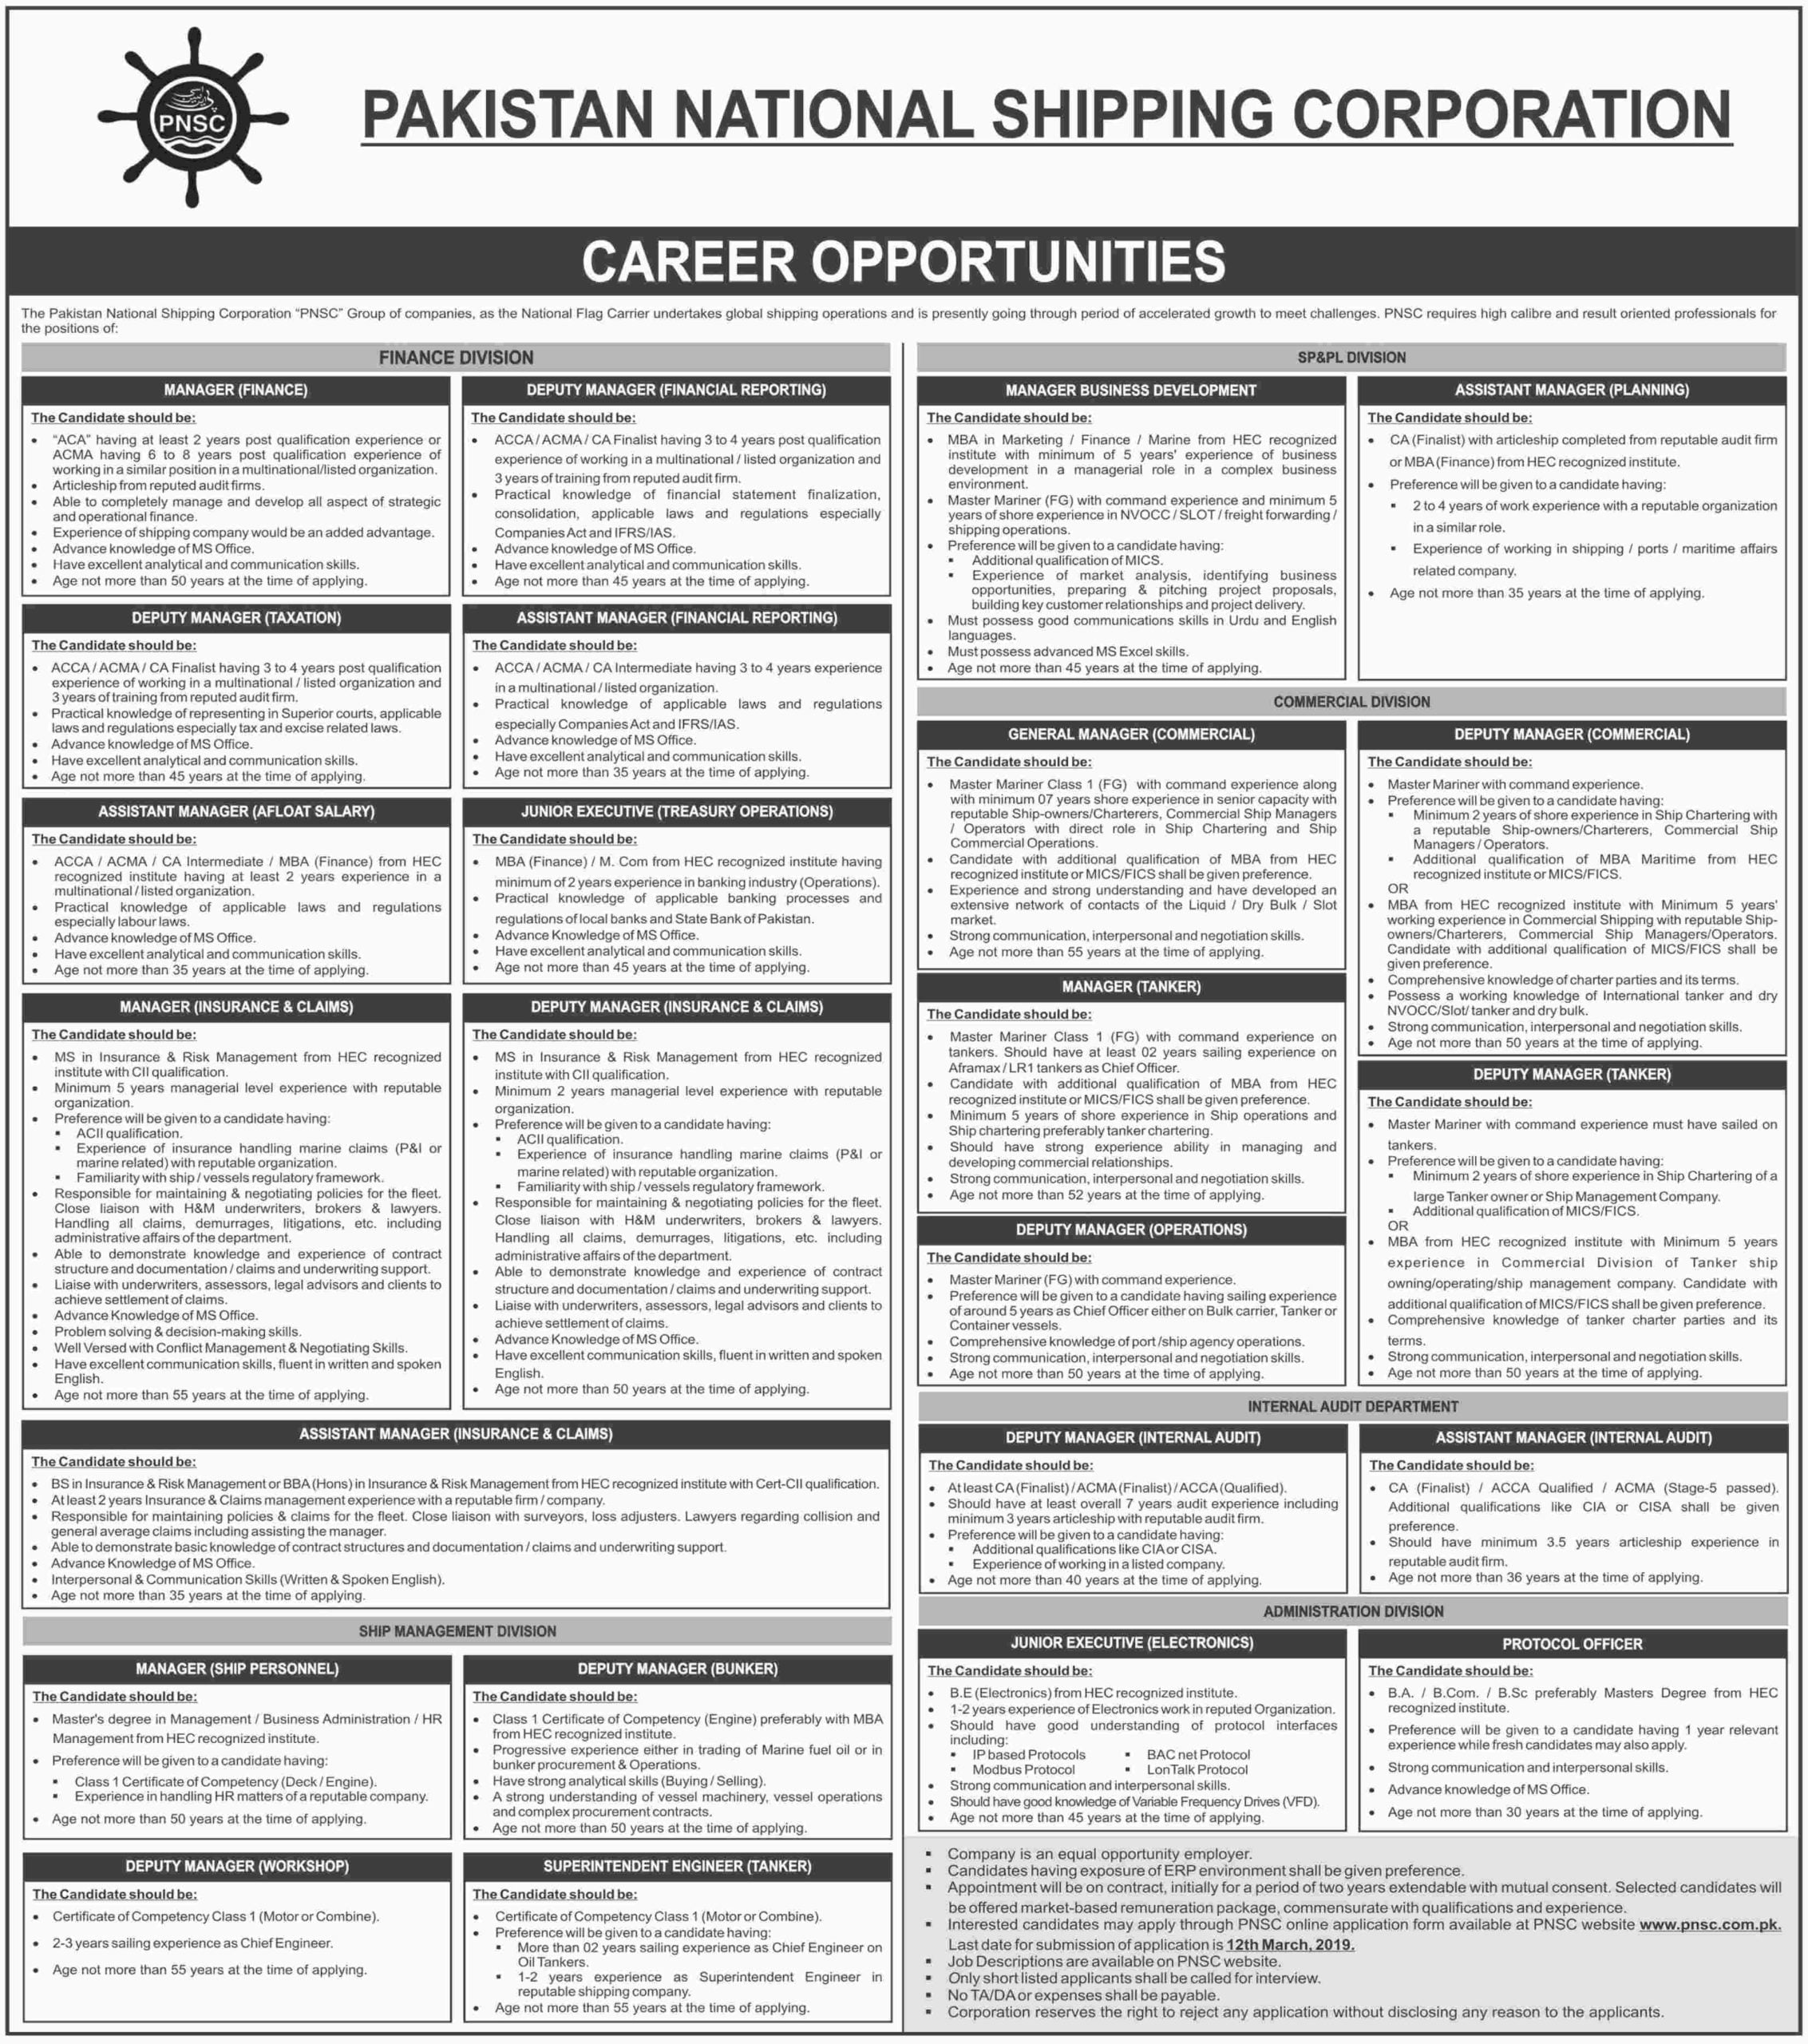 Pakistan National Shipping Corporation Pnsc Jobs 2019 Www Pnsc Com Pk Apply Online